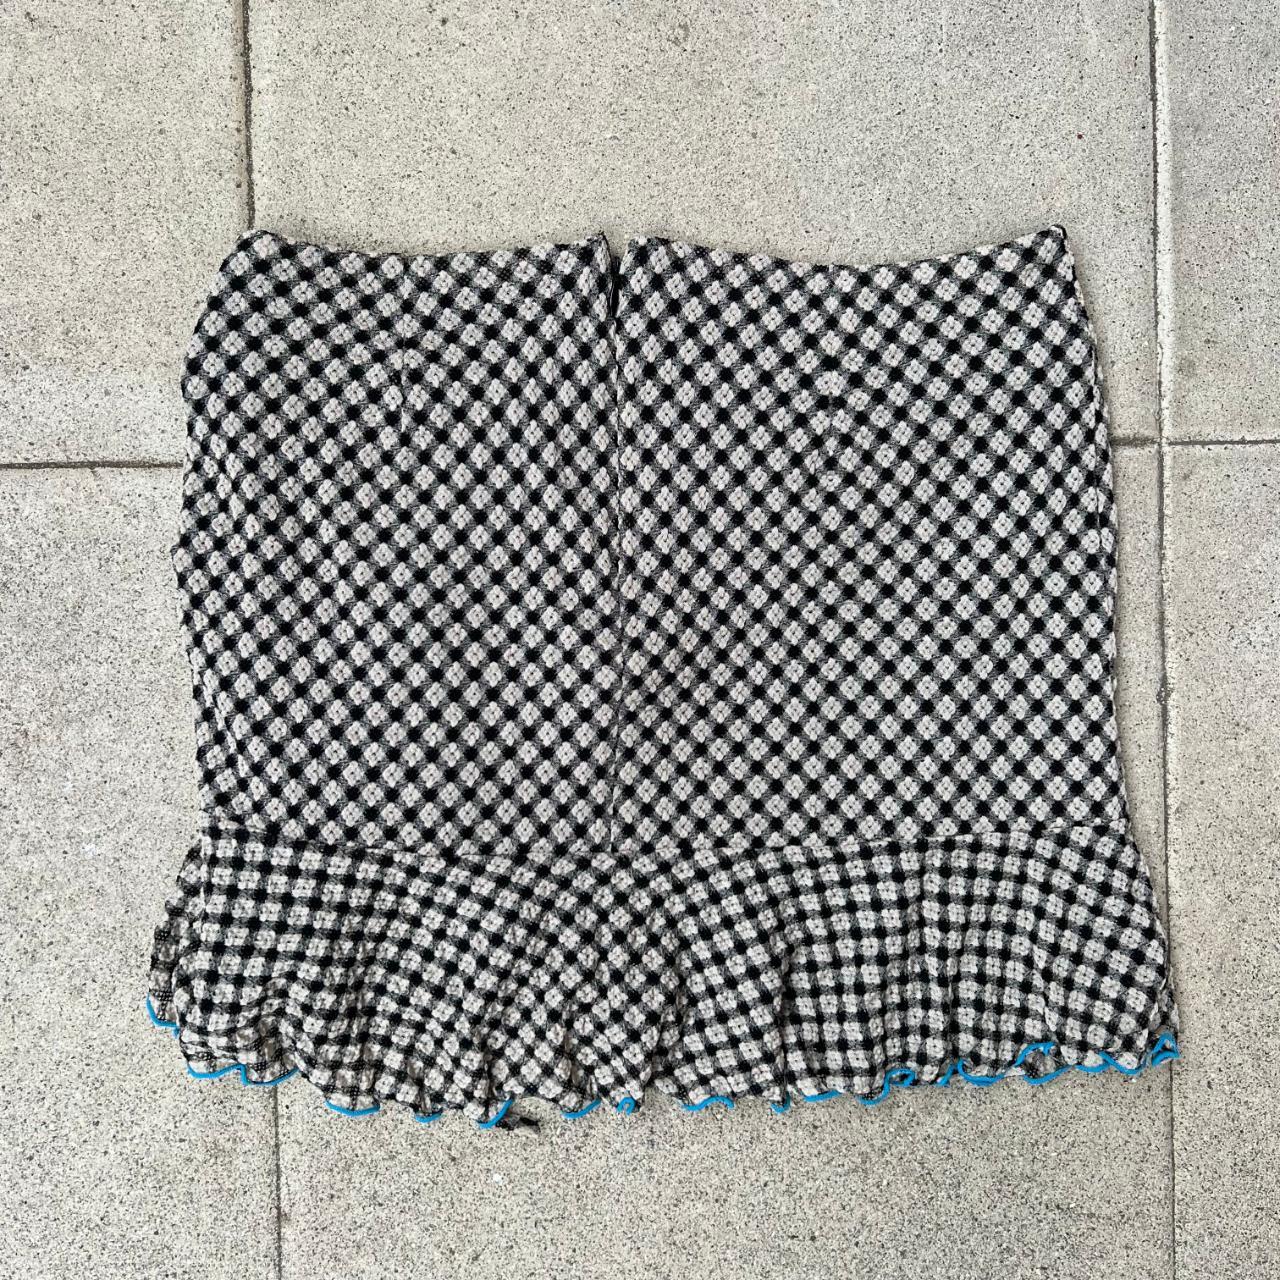 Product Image 2 - Expired Girl Chloe Check Skirt
-